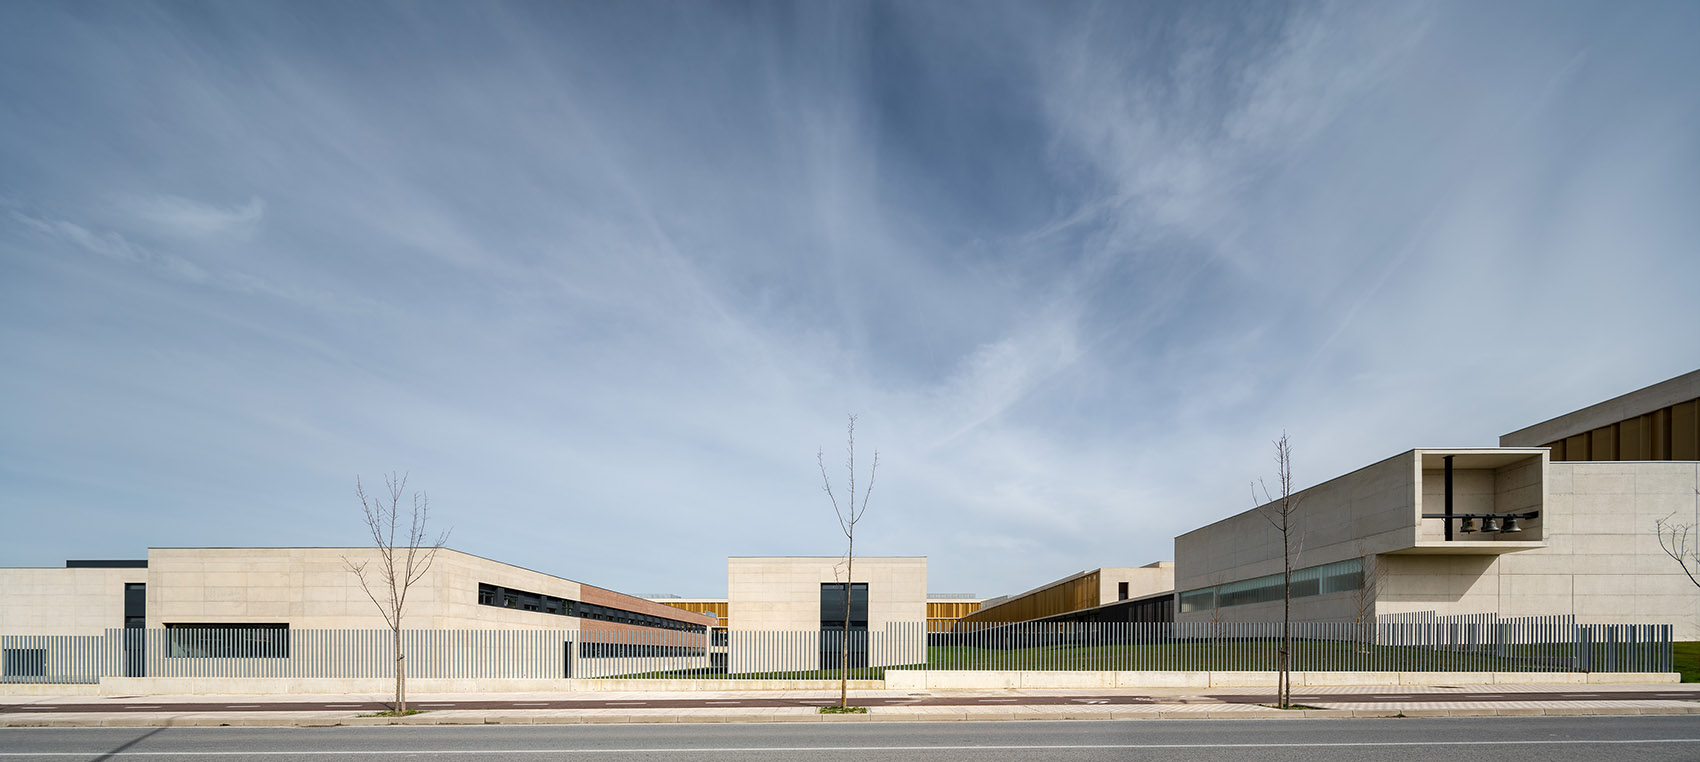 Salesianos Pamplona工艺学校，西班牙/体块与空地交错形成丰富空间体验-56